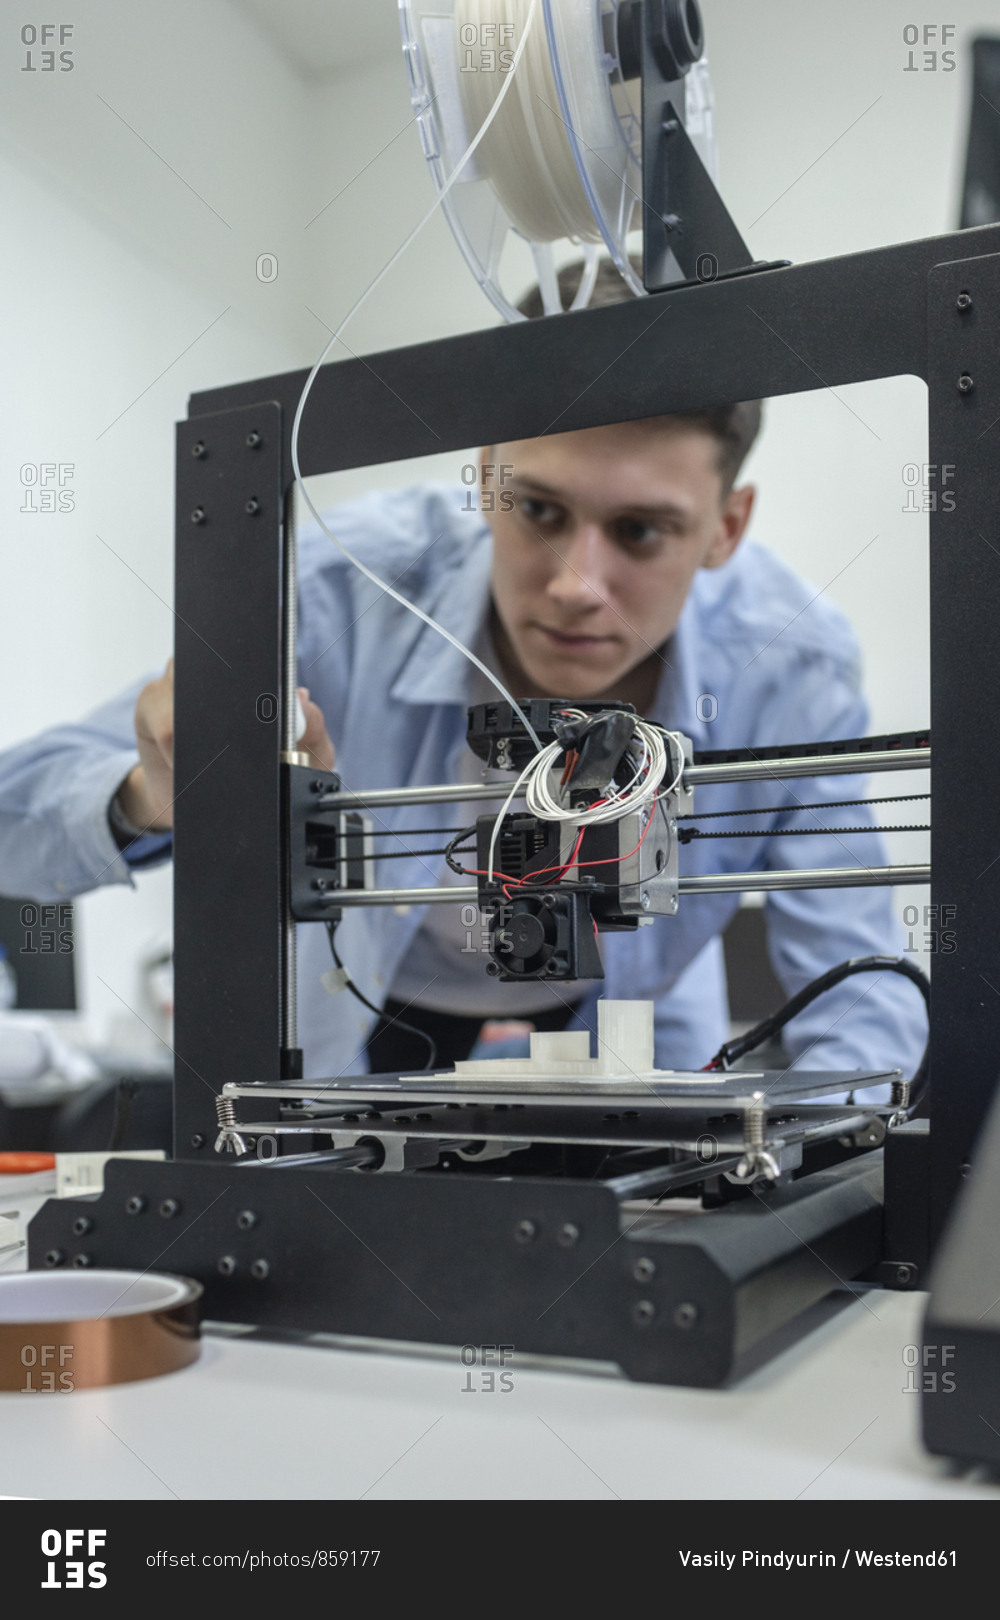 Student setting up 3D printer- using laptop